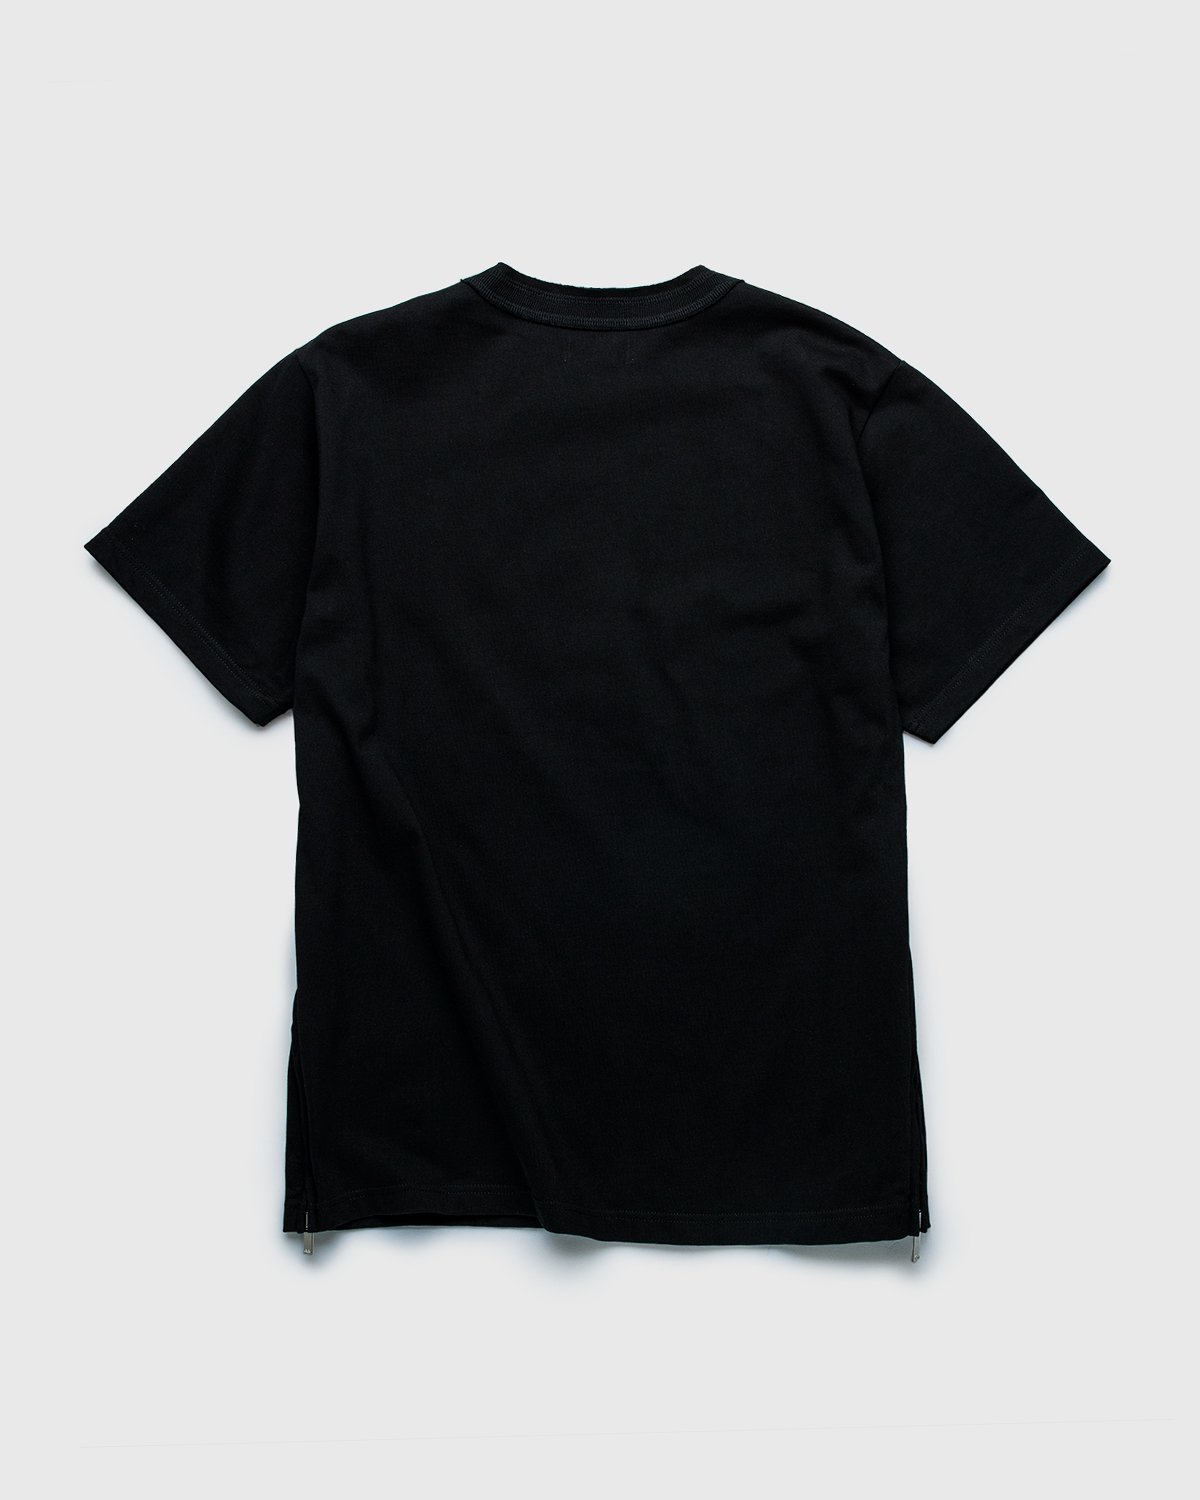 A.P.C. x Sacai - Kiyo T-Shirt Black - Clothing - Black - Image 2